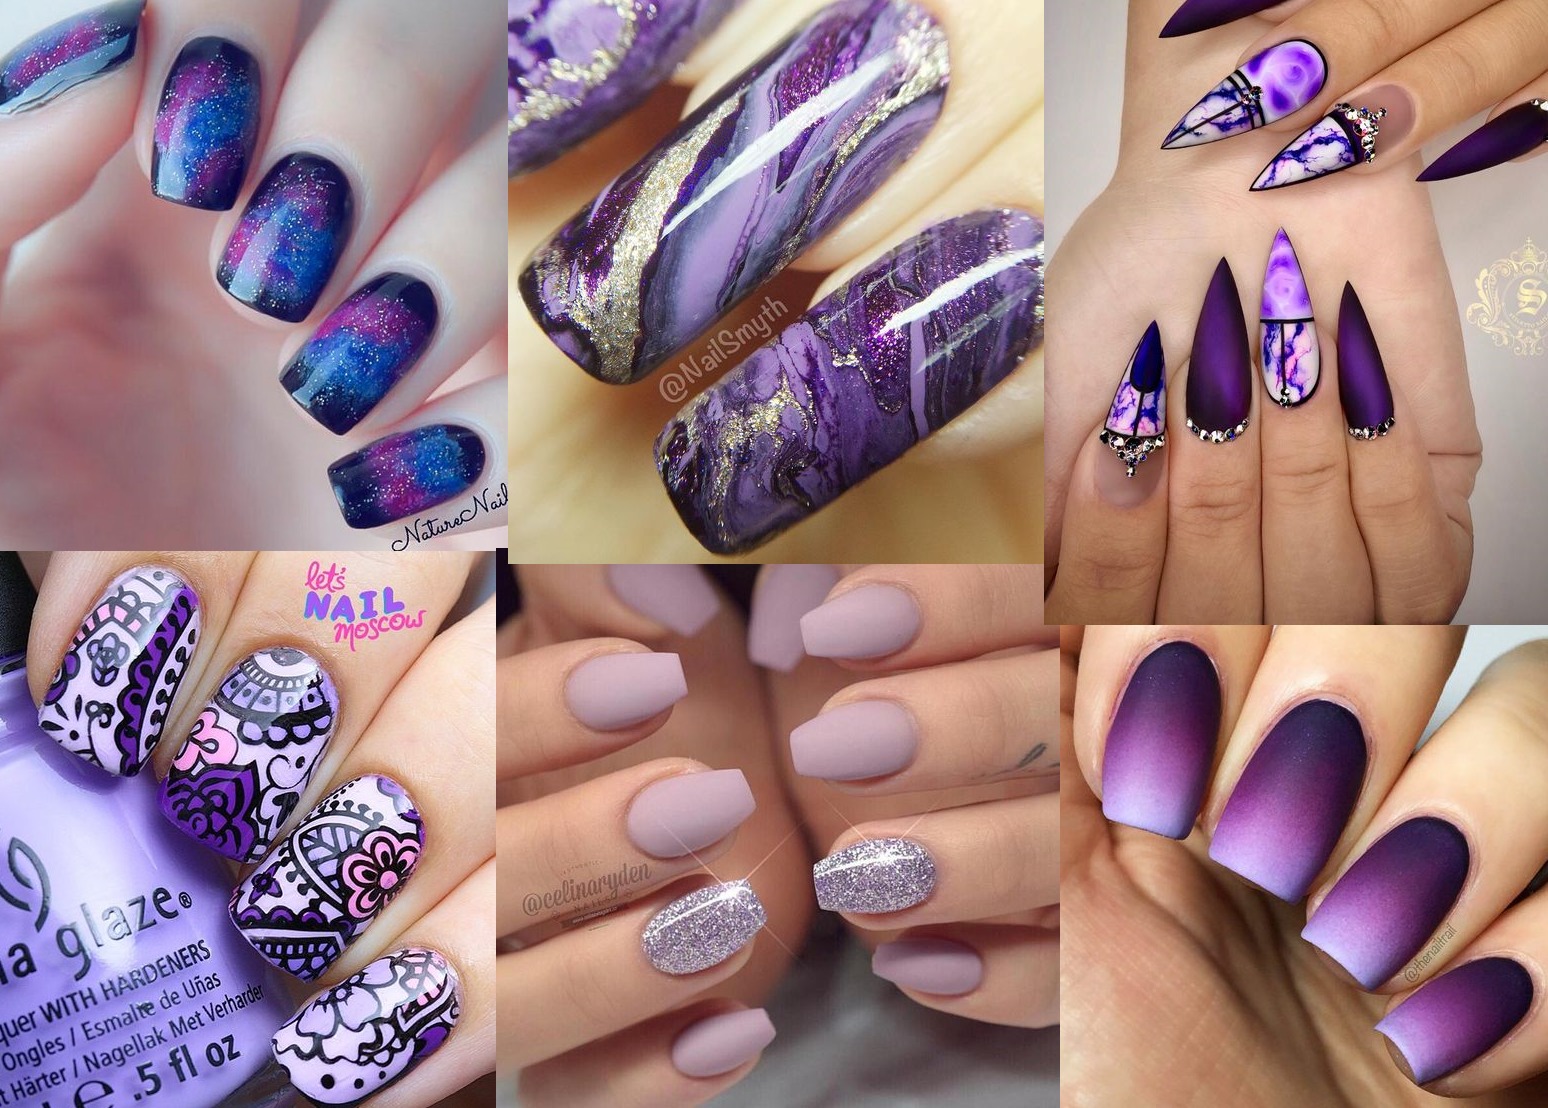 4. Dark purple nail polish - wide 2